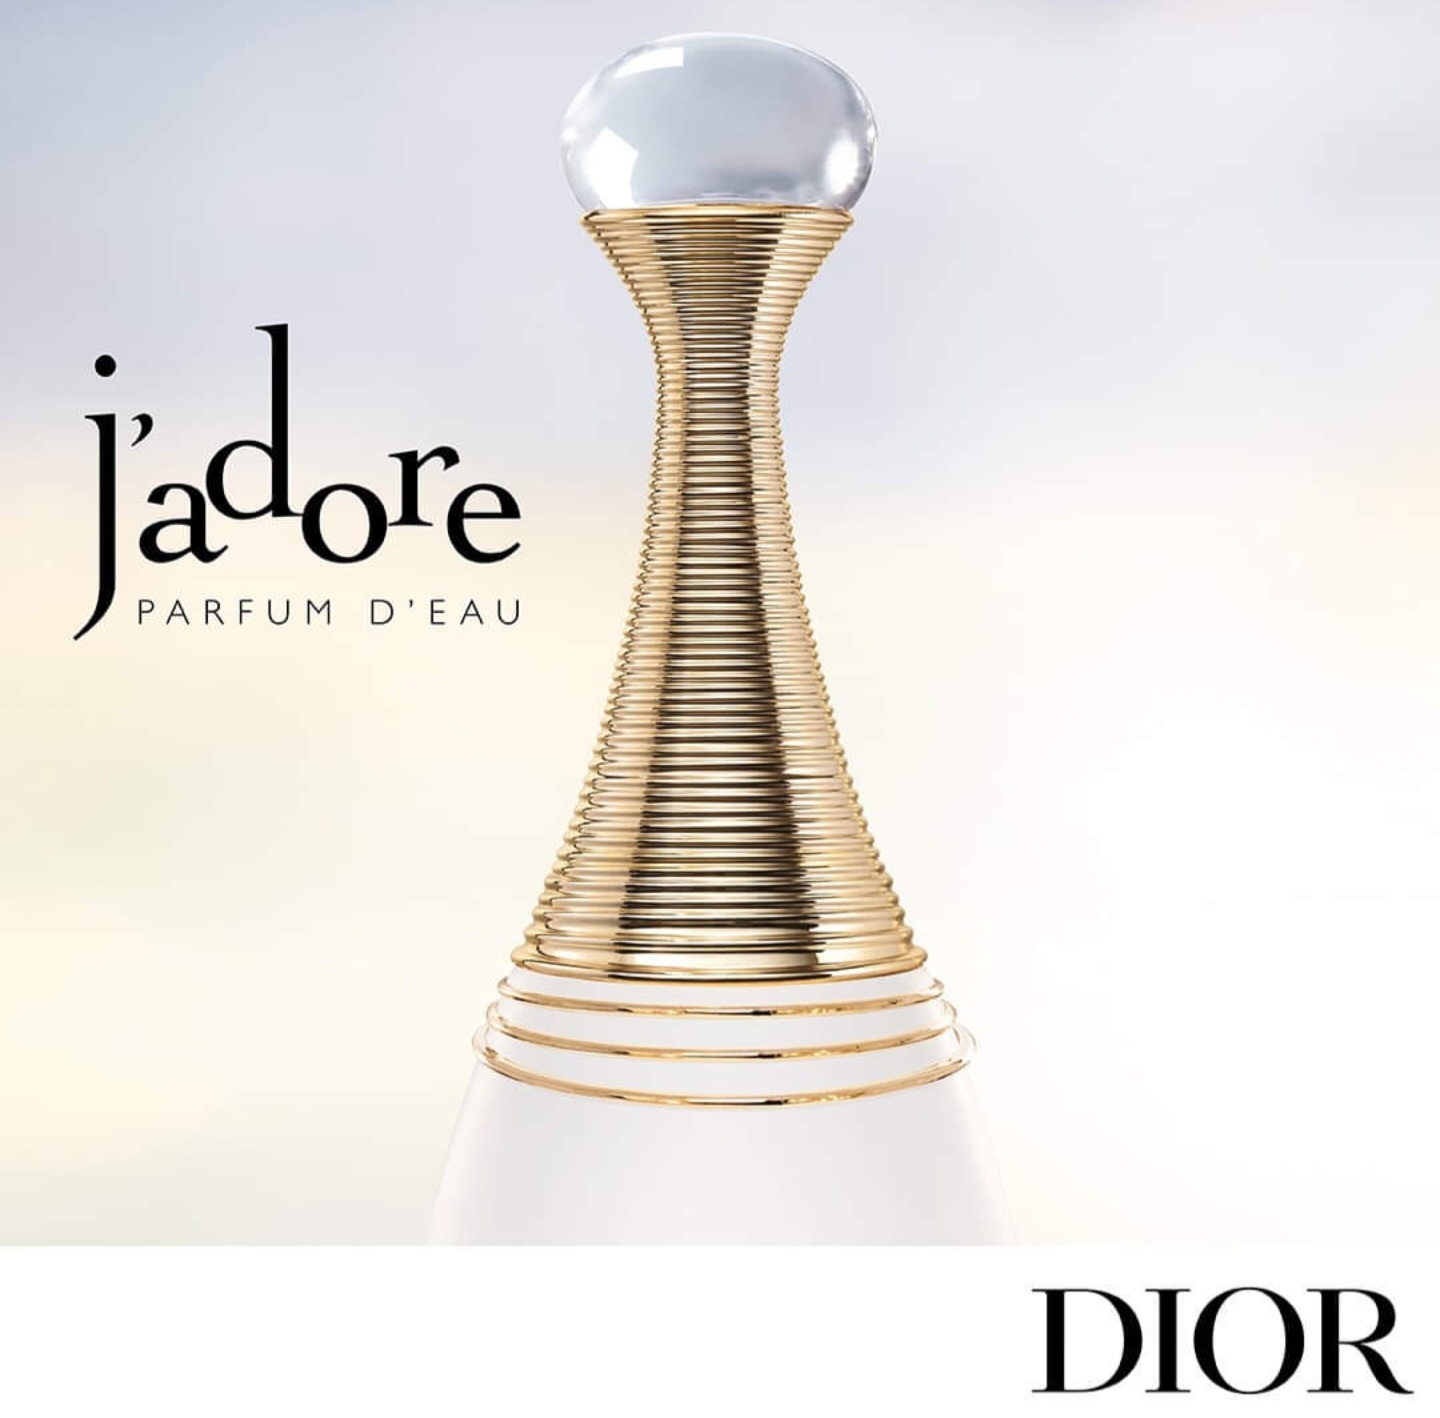 Free Sample of Dior J’adore Parfum d’Eau